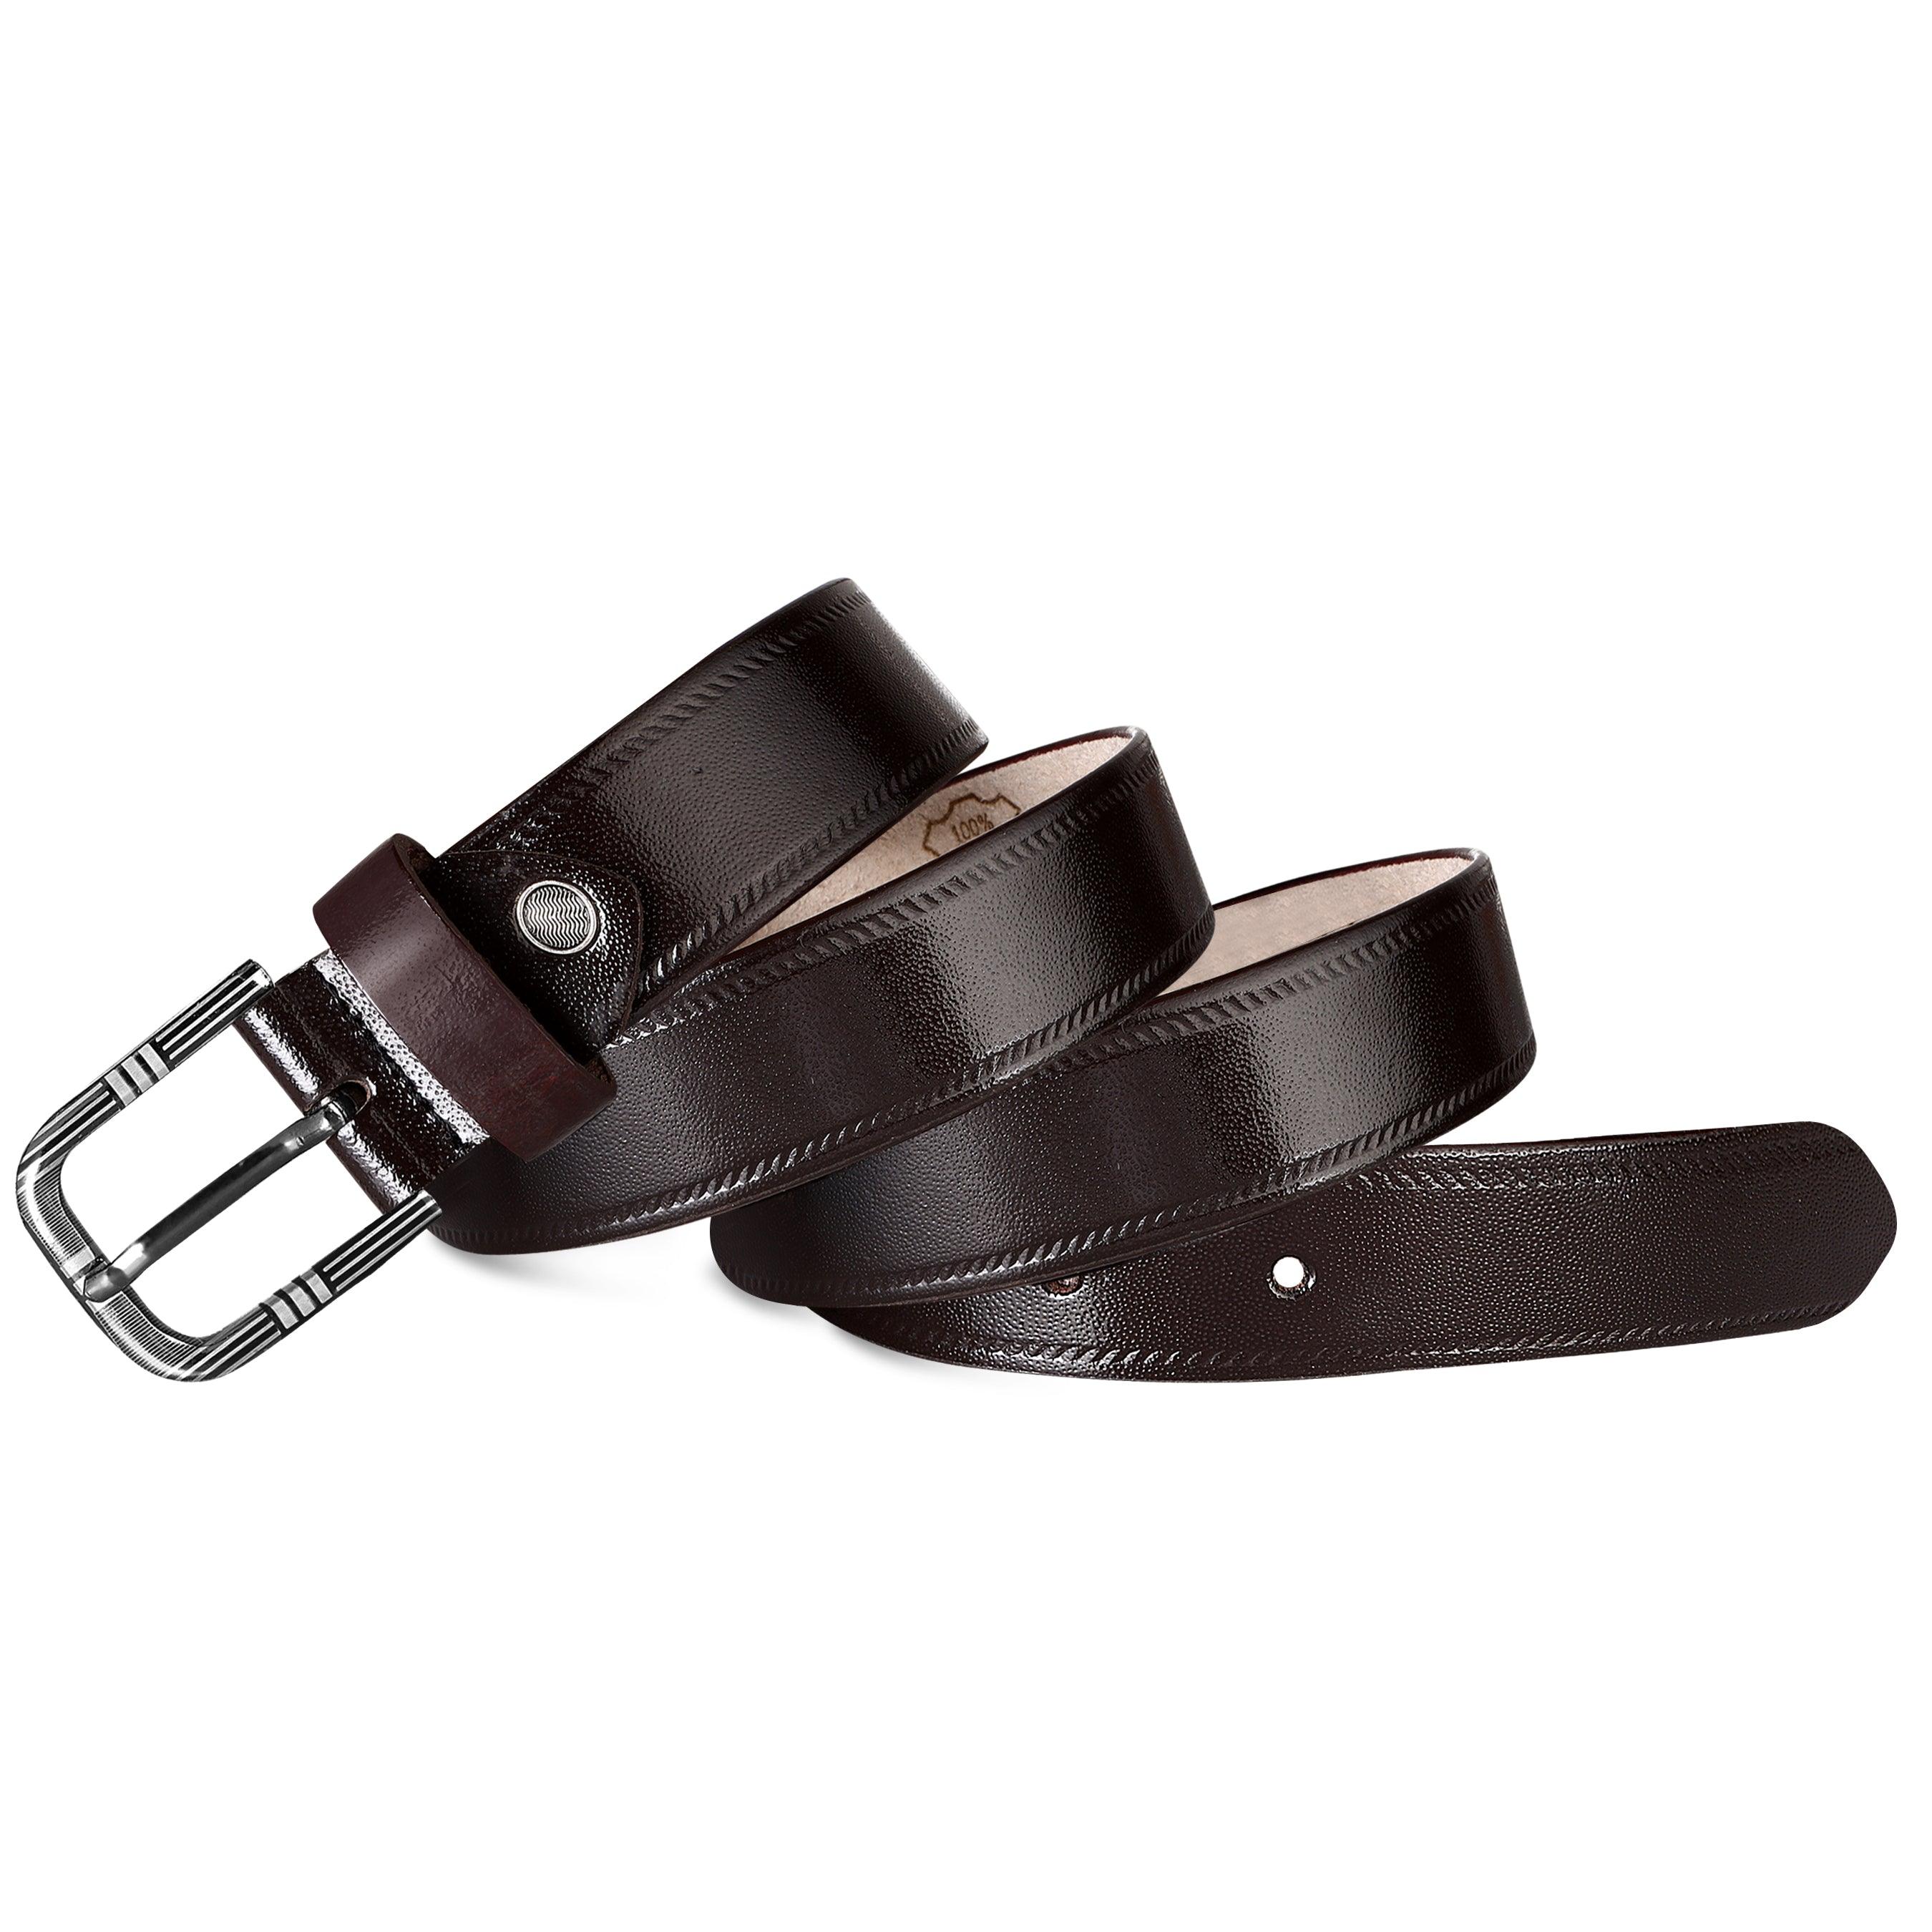 Jaxer Embossed Brown Leather Belt for Men - JXBLT106 - Jainx Store